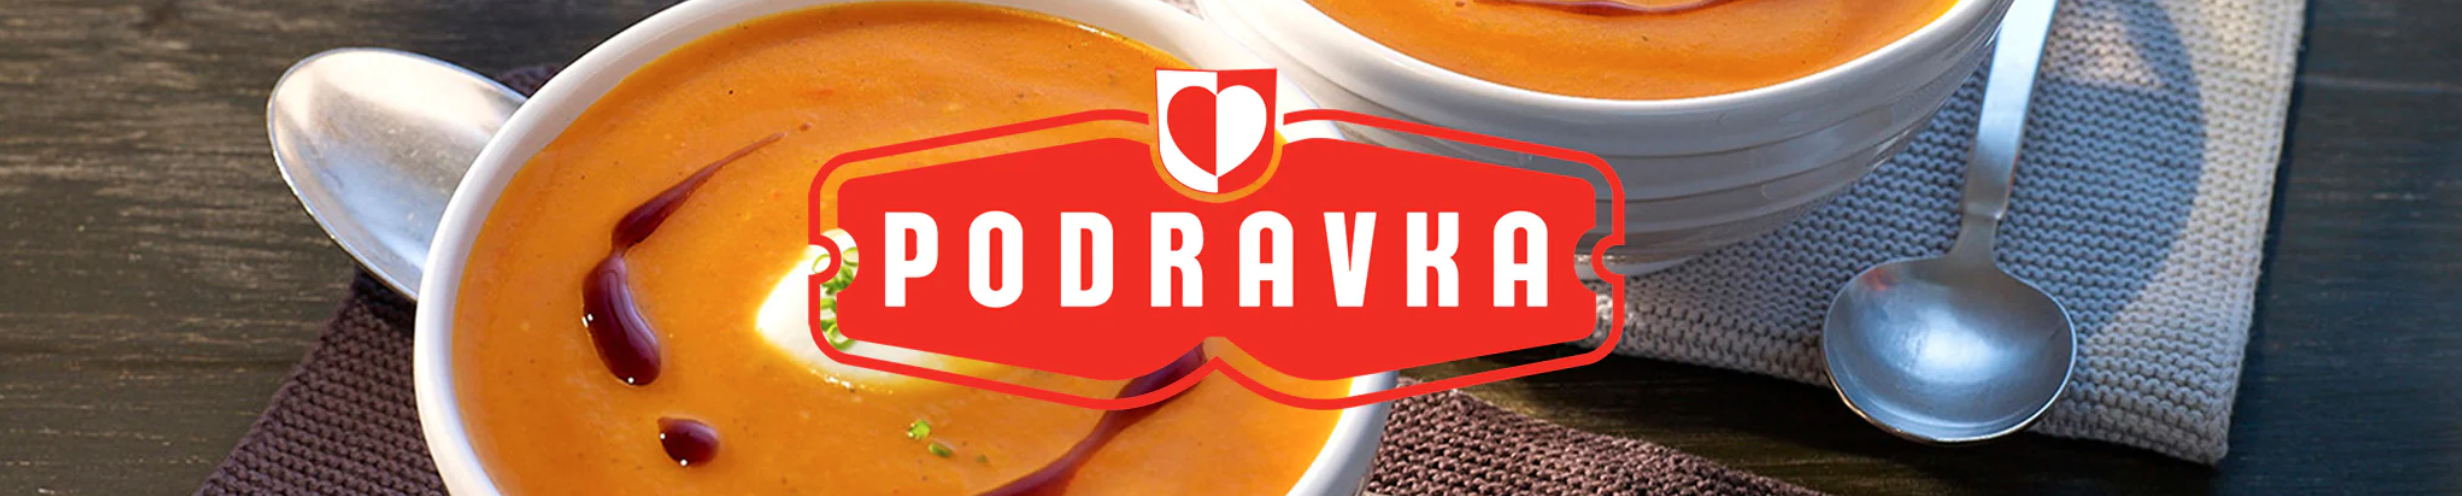 Podravka - Global Imports & Exports Wholesale European Food Distributors